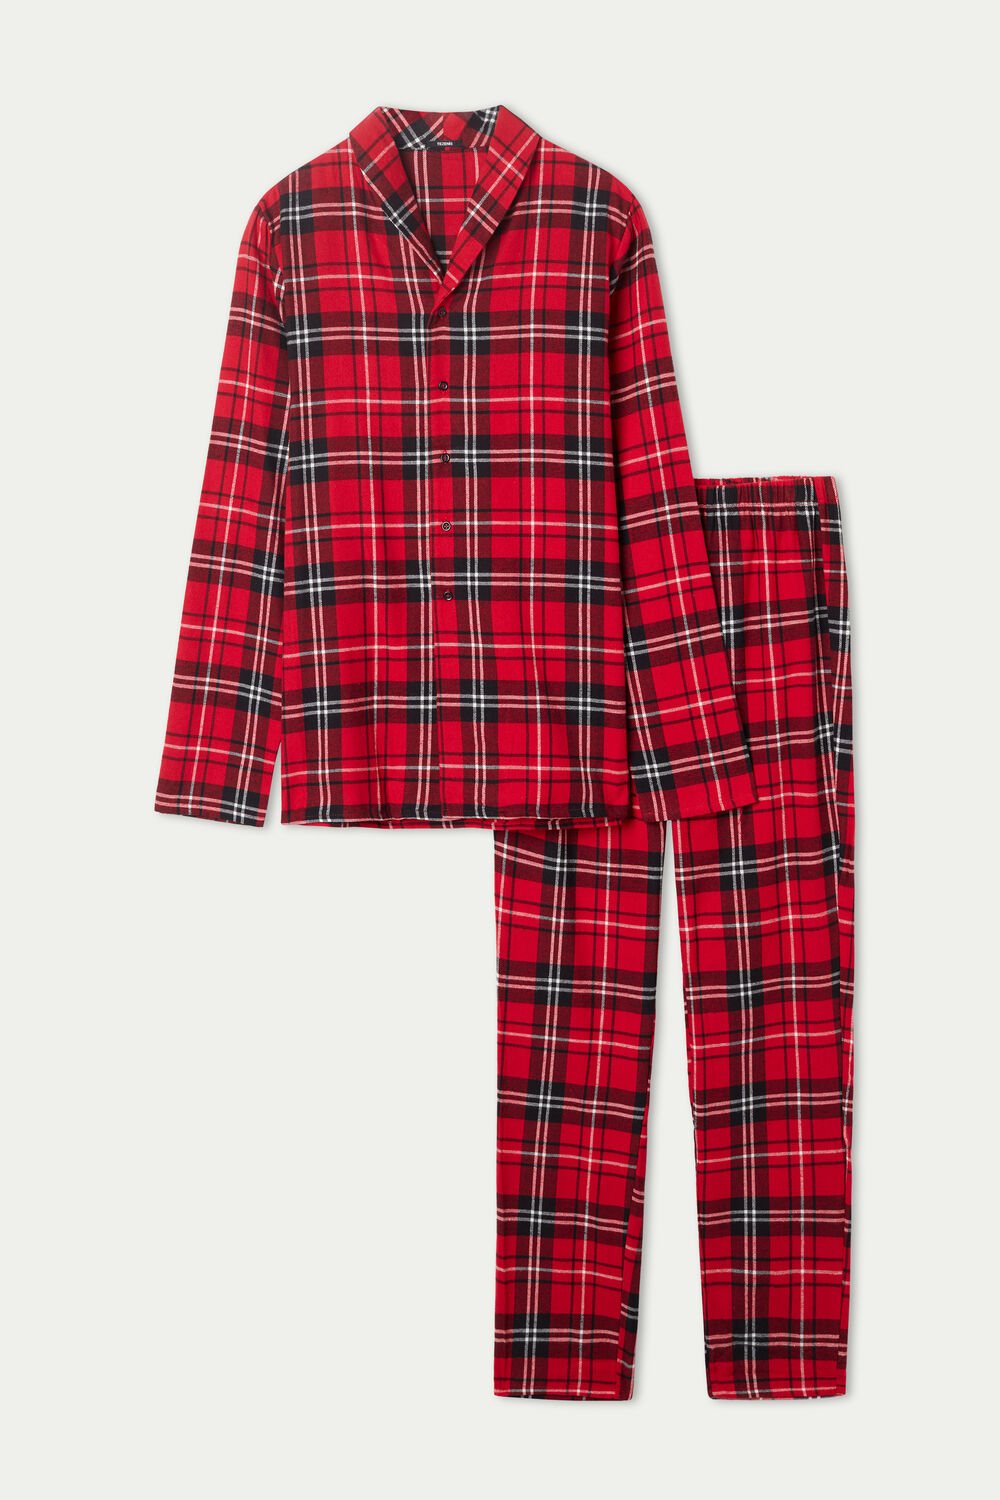 Pijama Tezenis, 29,99€